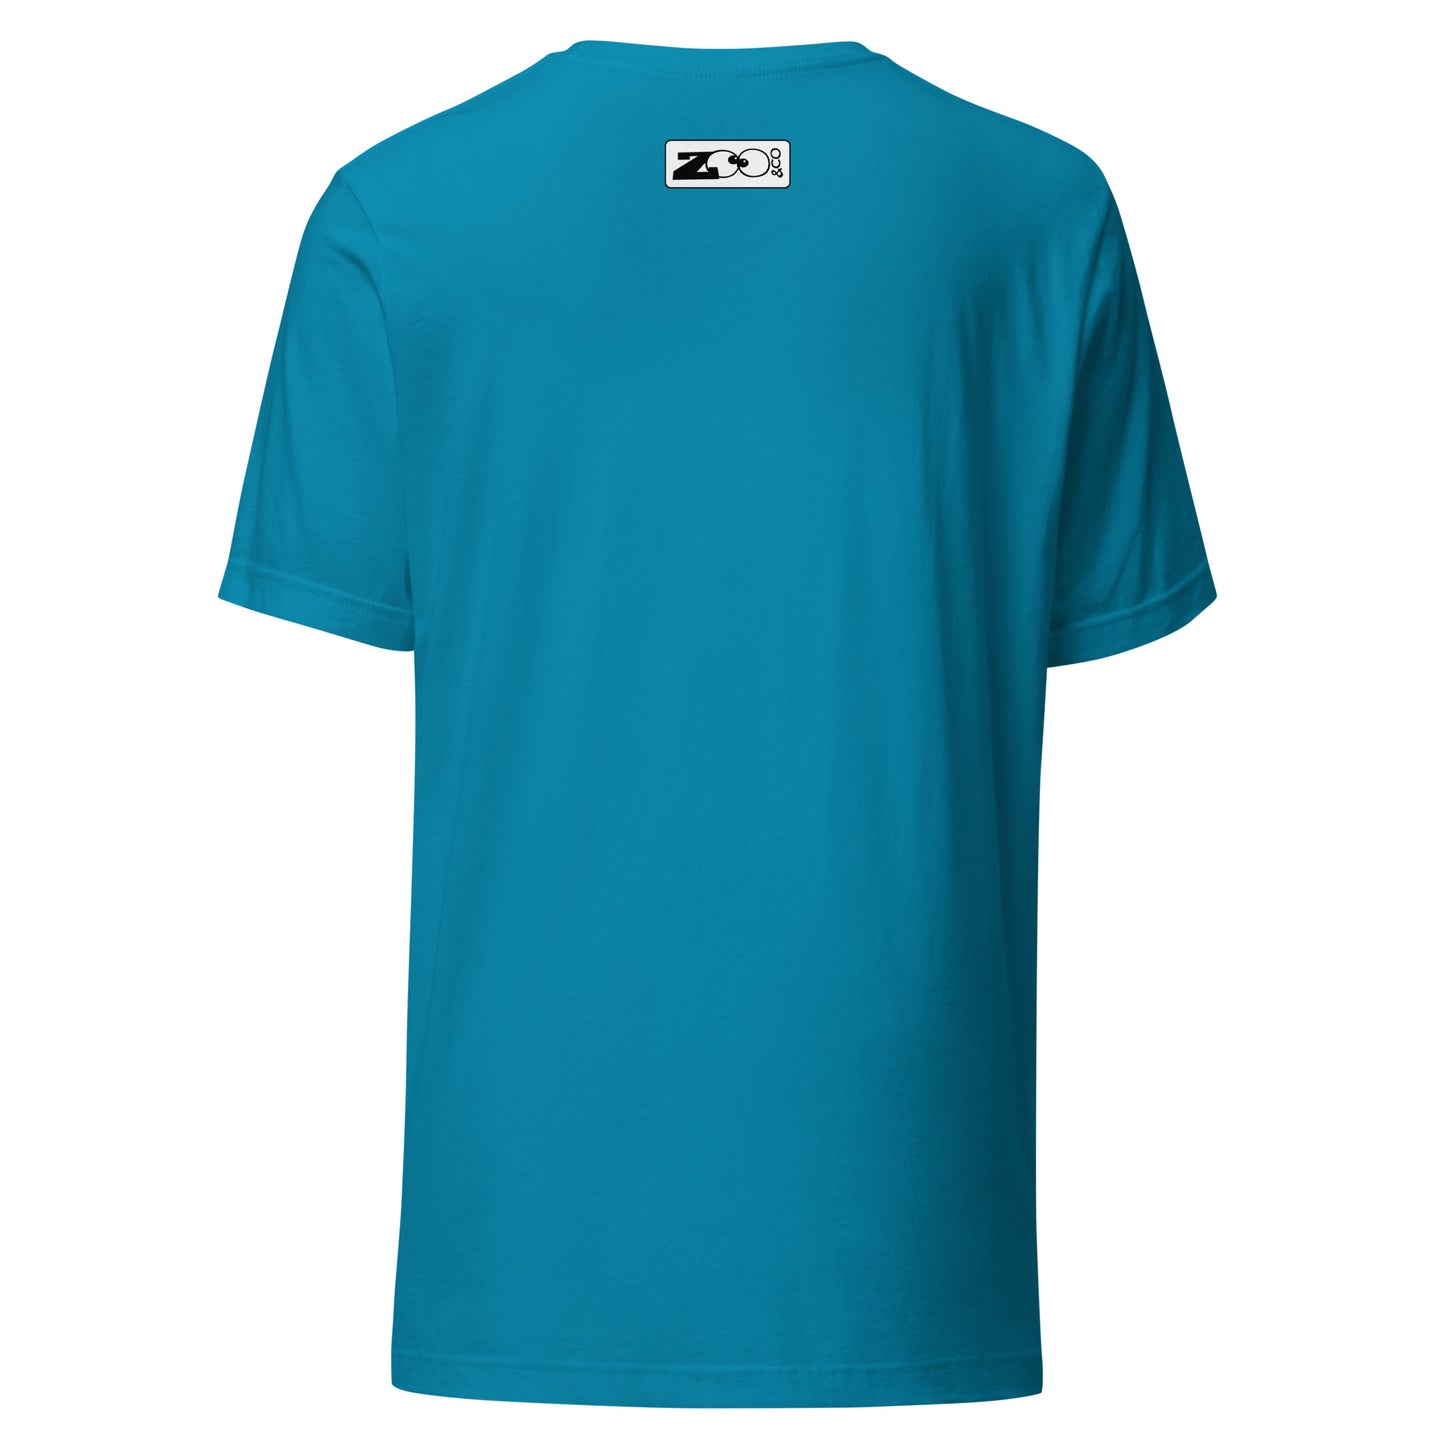 Surfing is a true extreme sport Unisex t-shirt. Aqua color. Back view